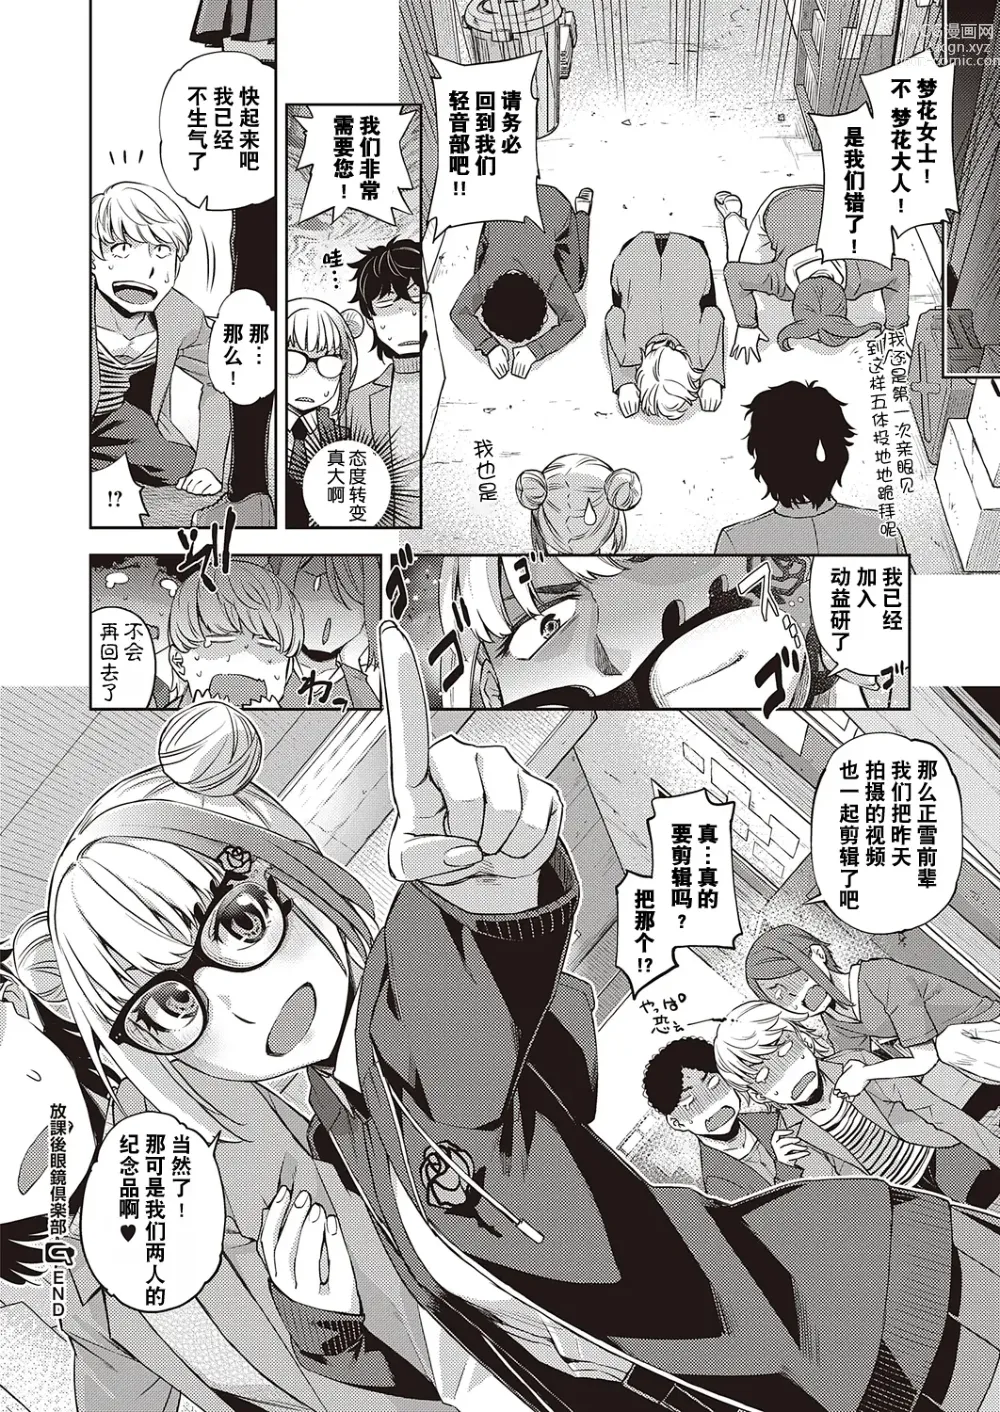 Page 24 of manga Houkago Megane Club